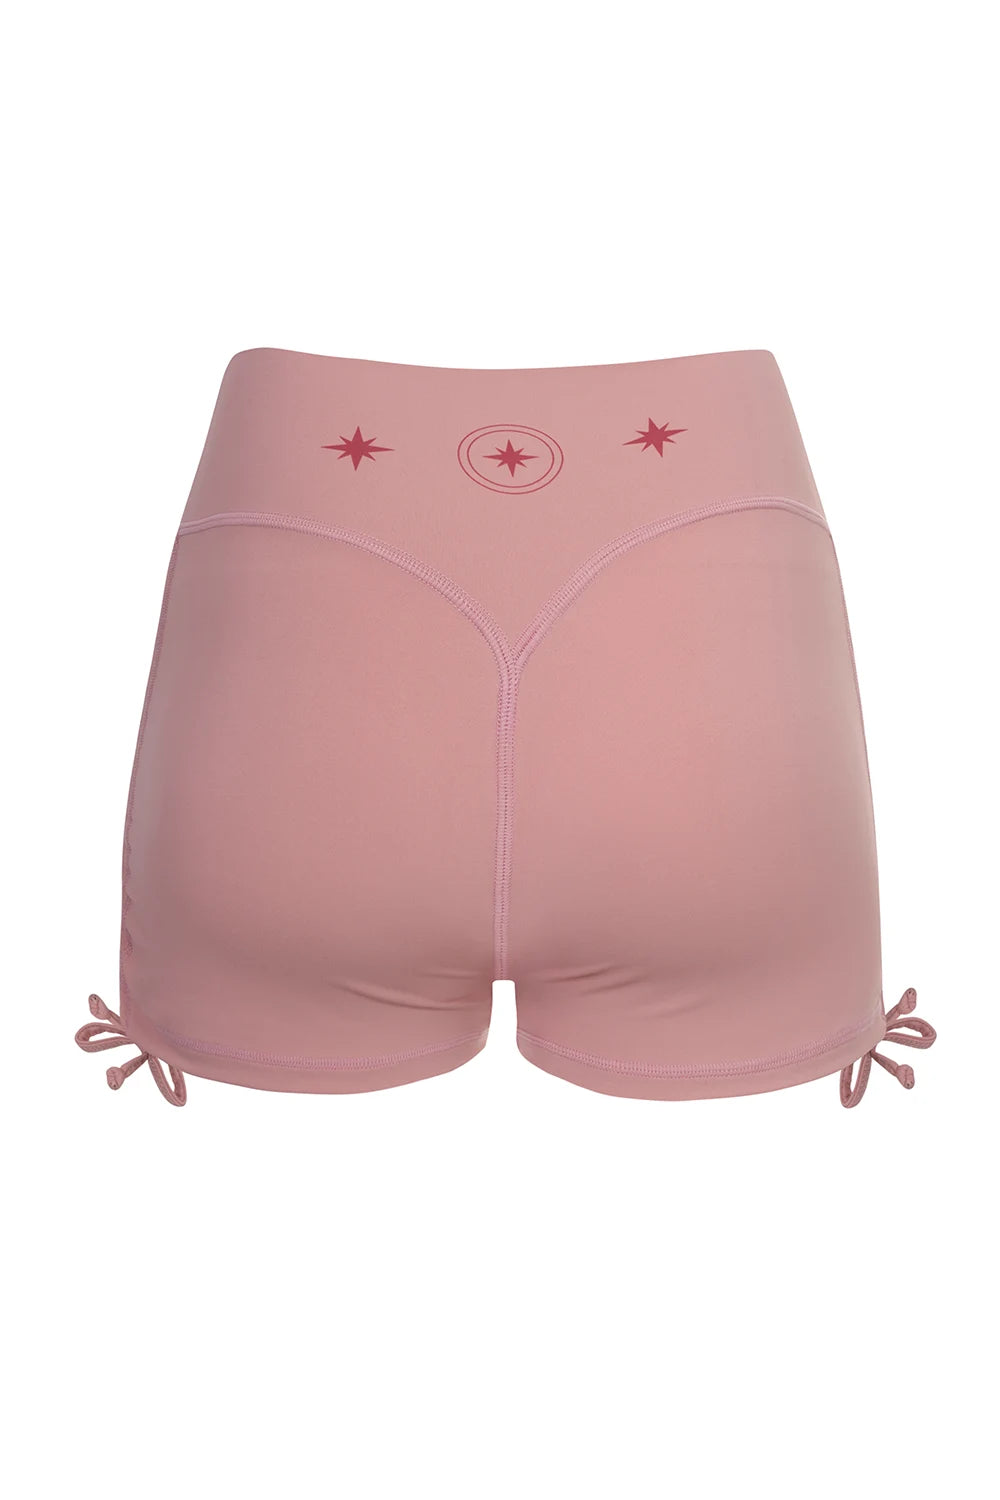 Silueta de Shorts de yoga de Yogimi en color rosa. Costuras planas y fruncido lateral con lazo. Modelo Surya Mellow Rose